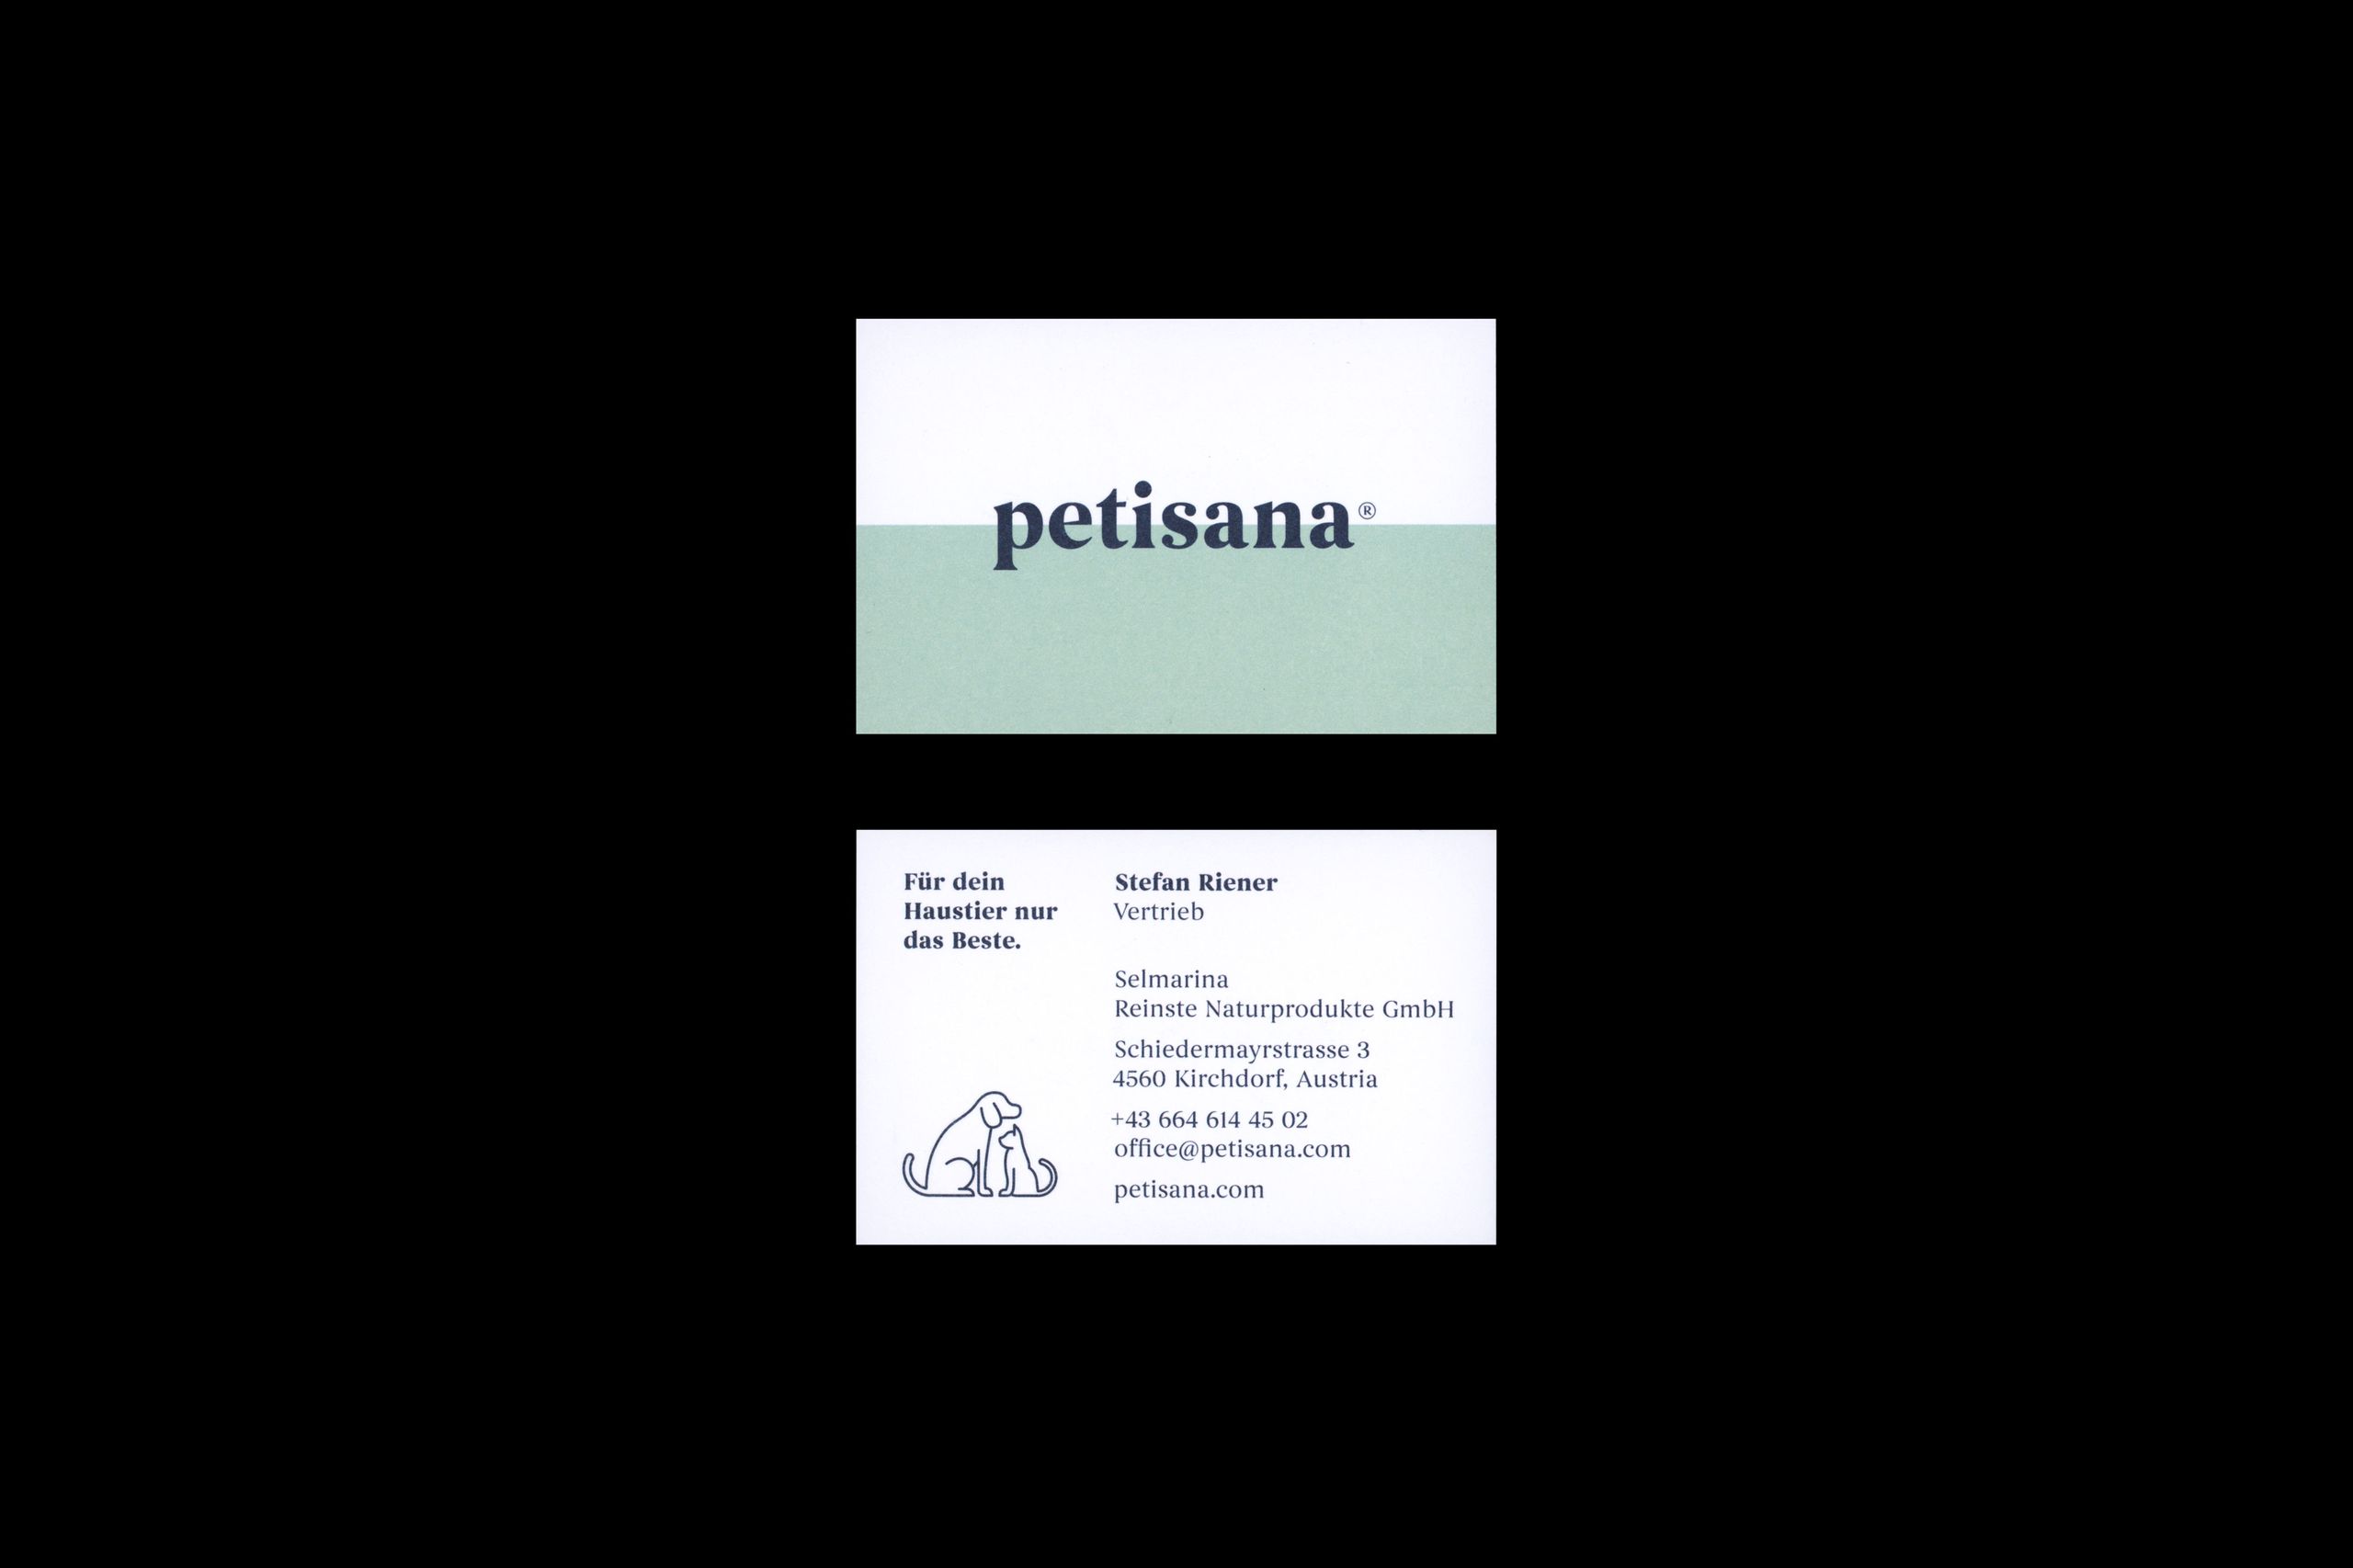 Selmarina Petisana Branding